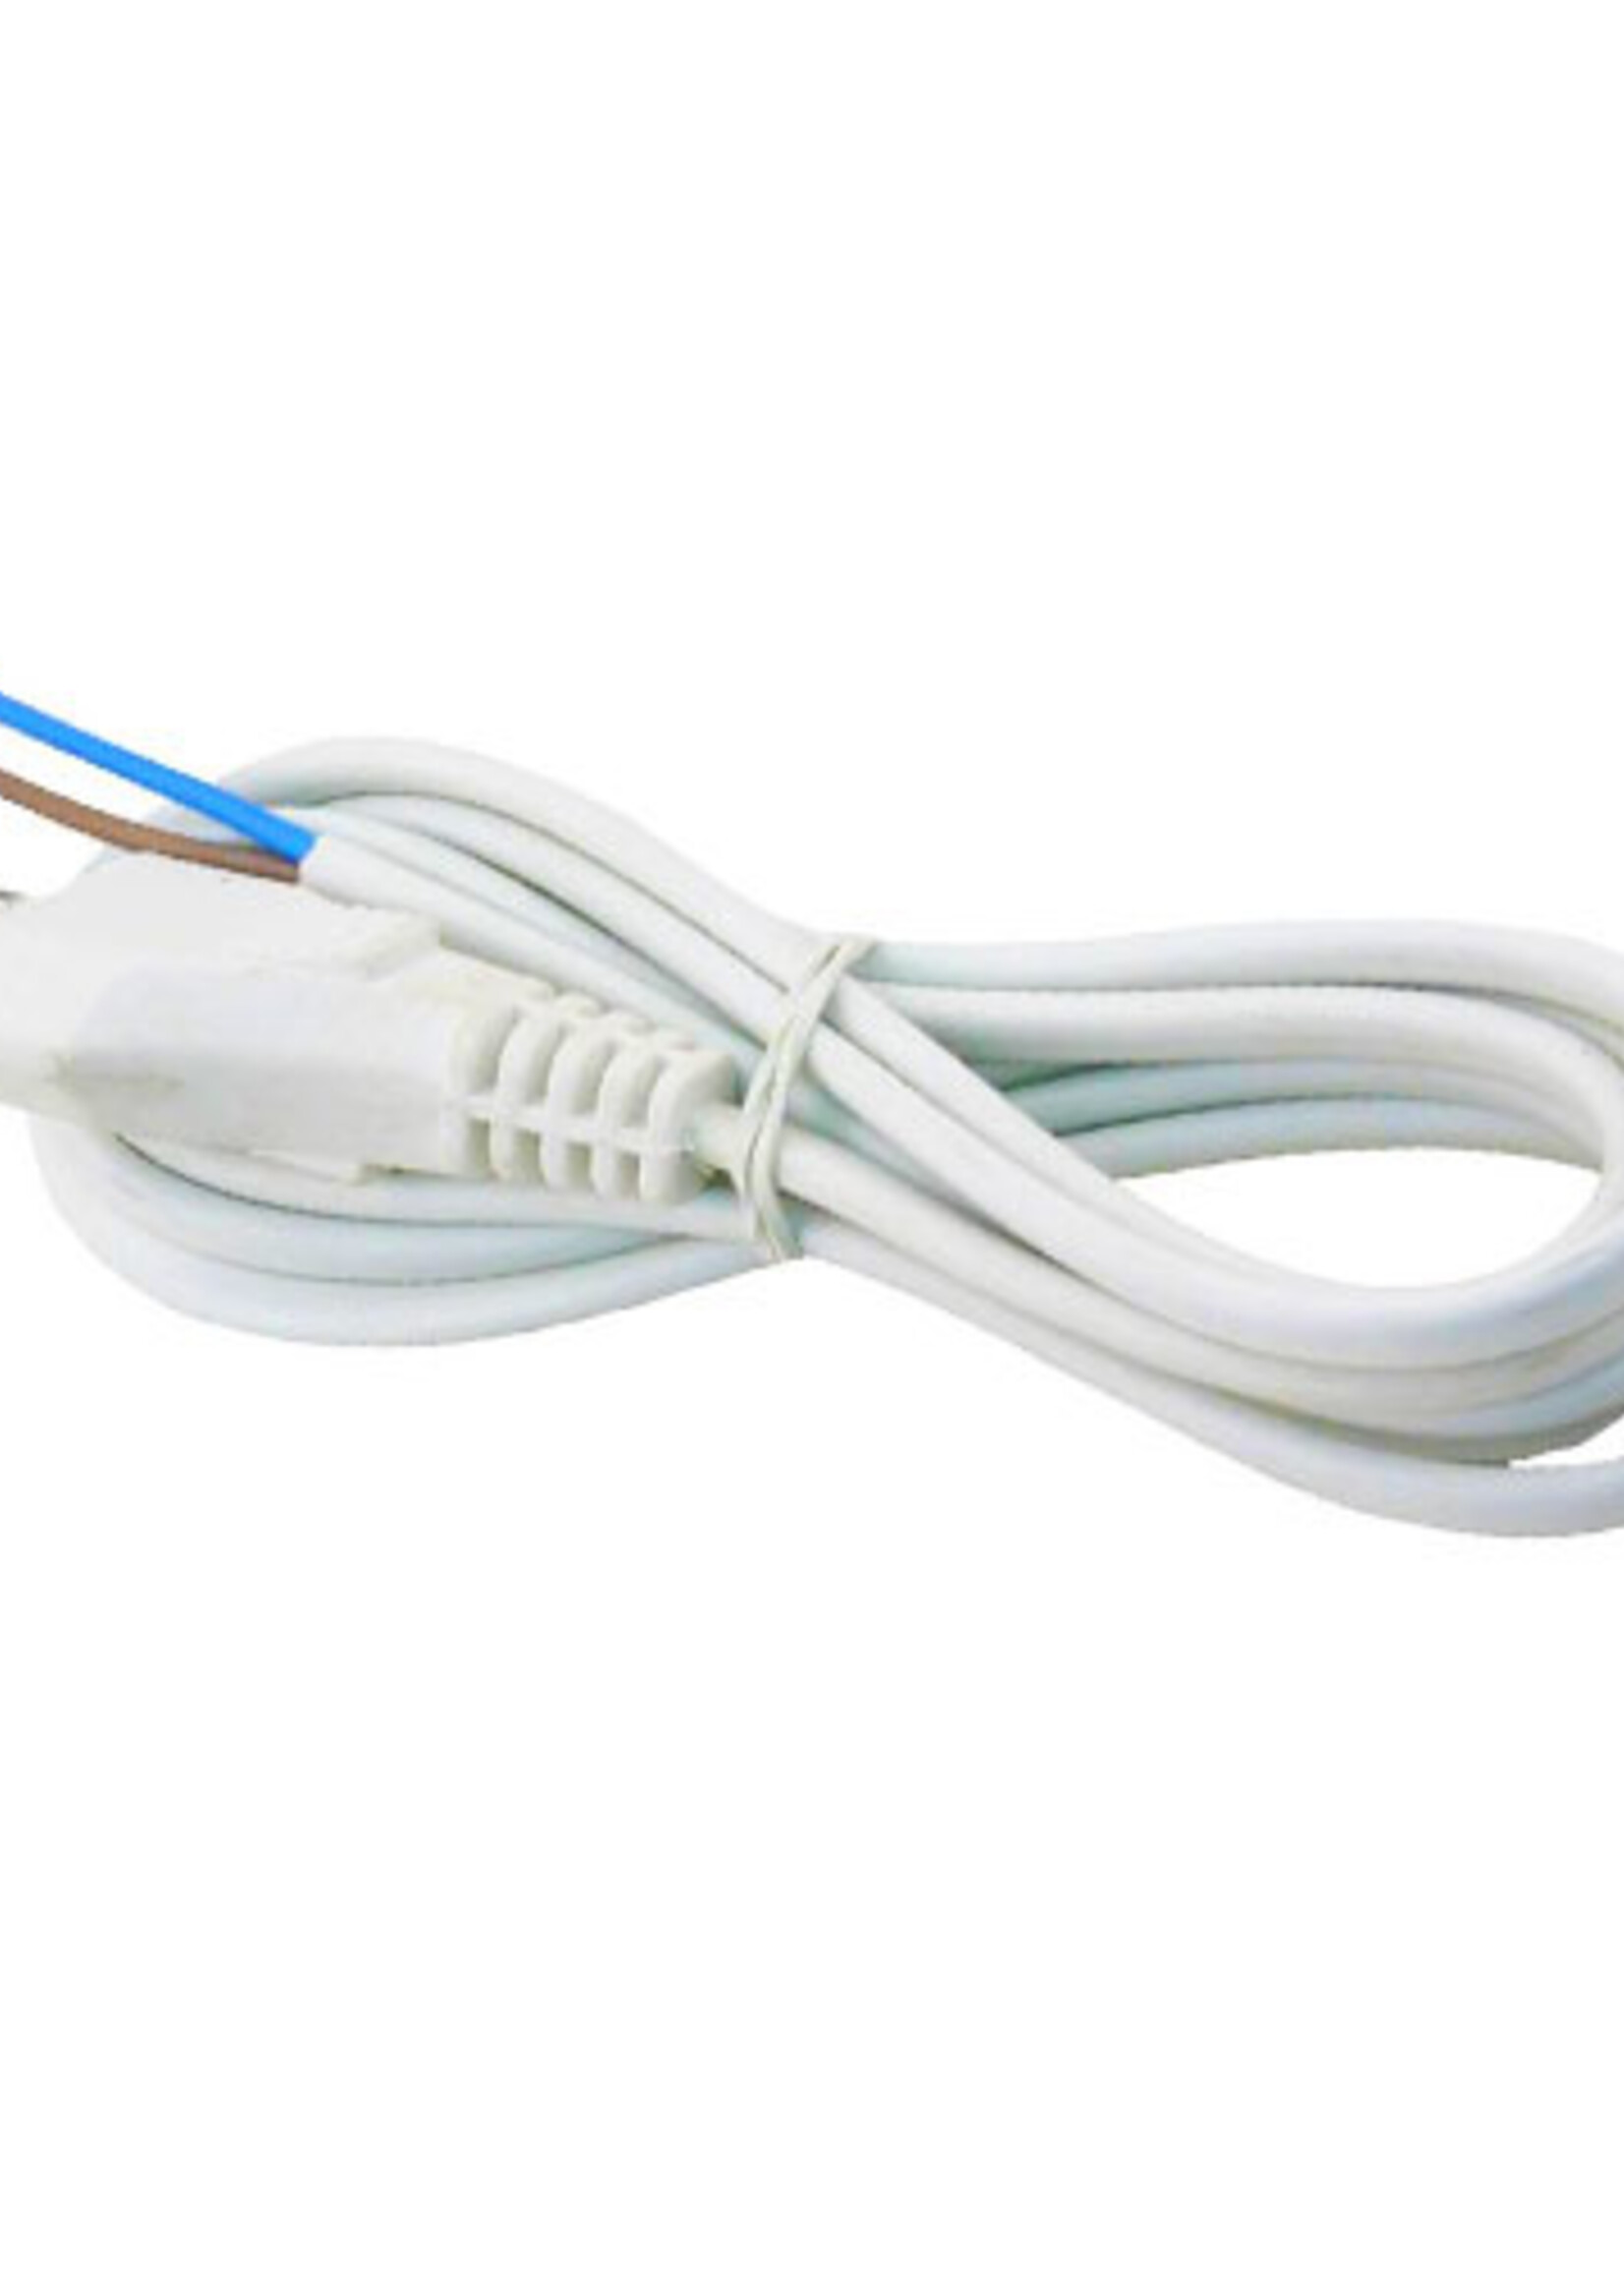 LEDWINKEL-Online Power cord with eu plug 1.5 meter 230V